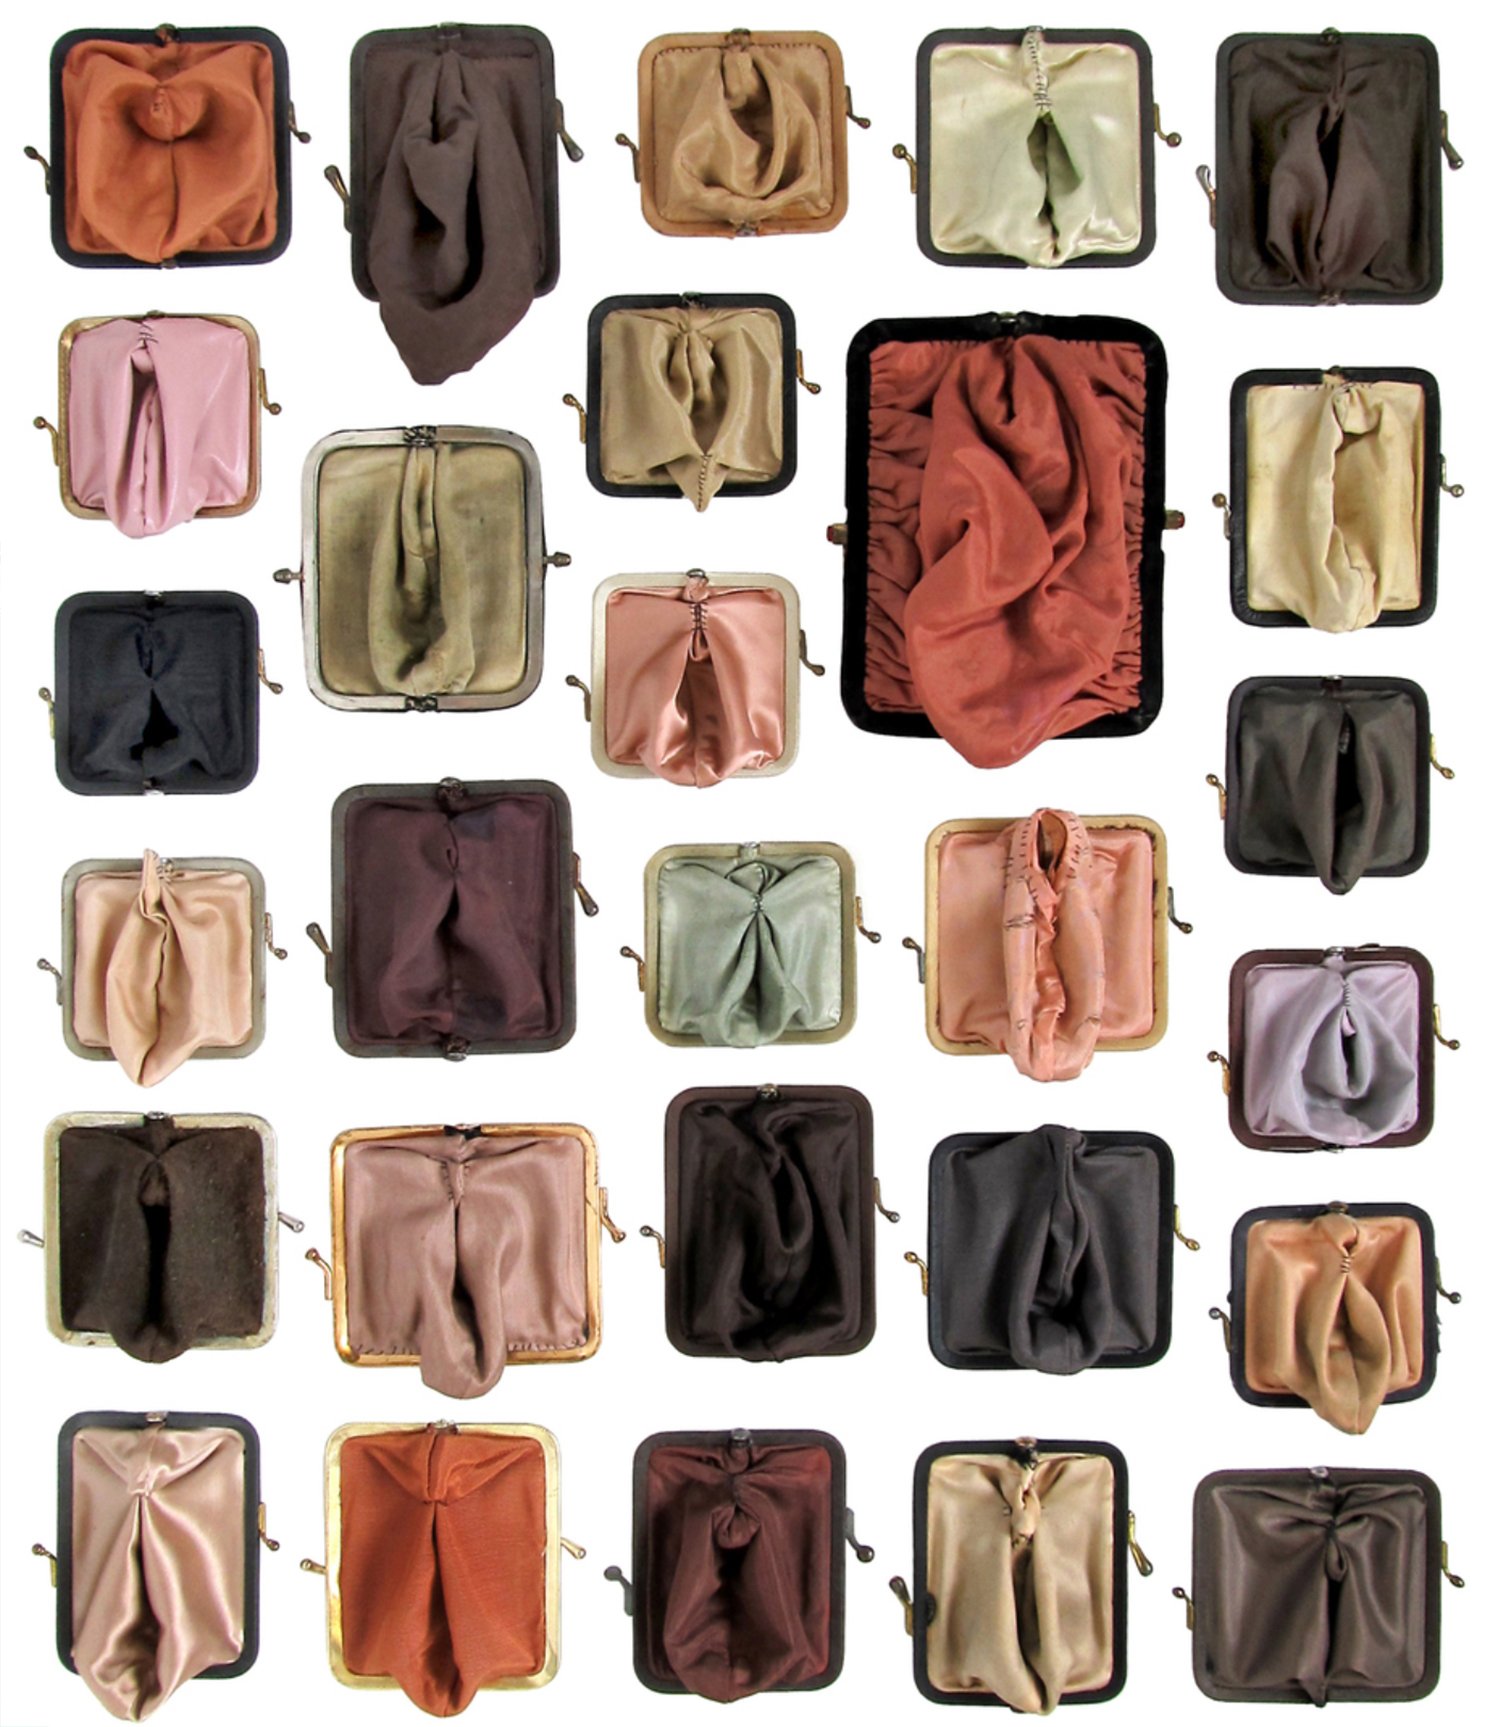 coin purses various colors, vaginas